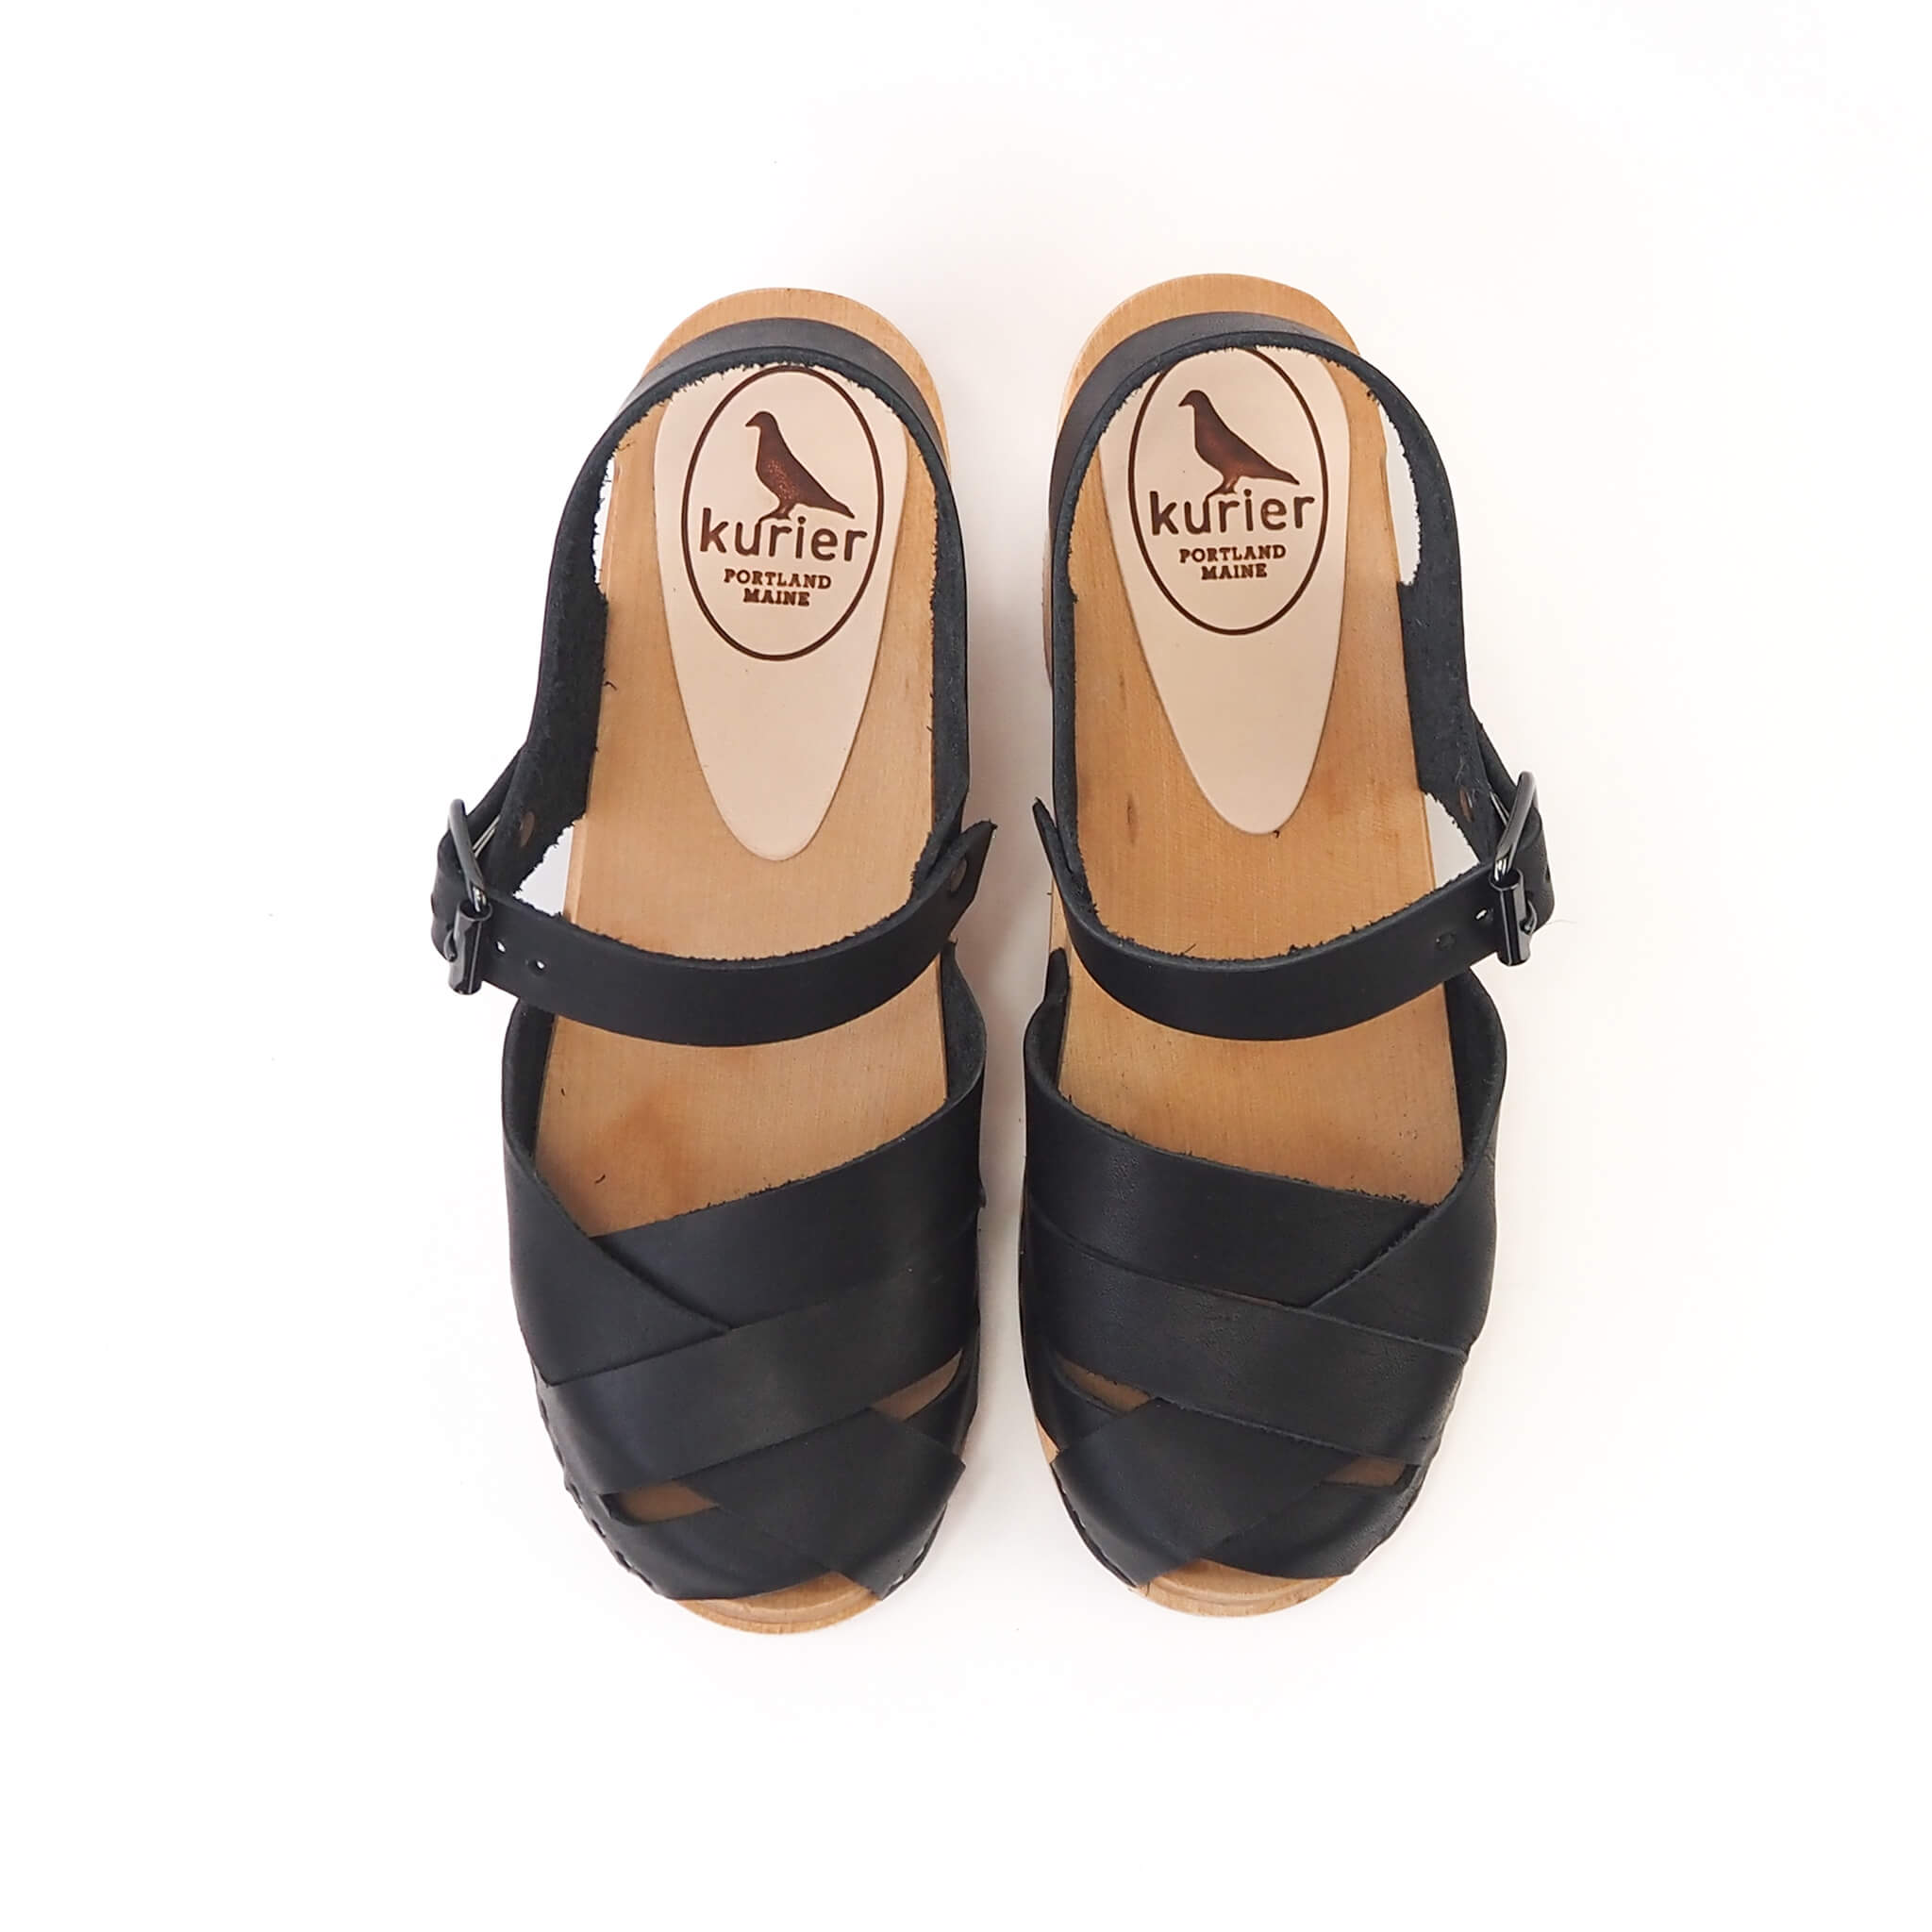 emelia clog high heel peep toe mary janesandal handmade american leather wood - coal top view